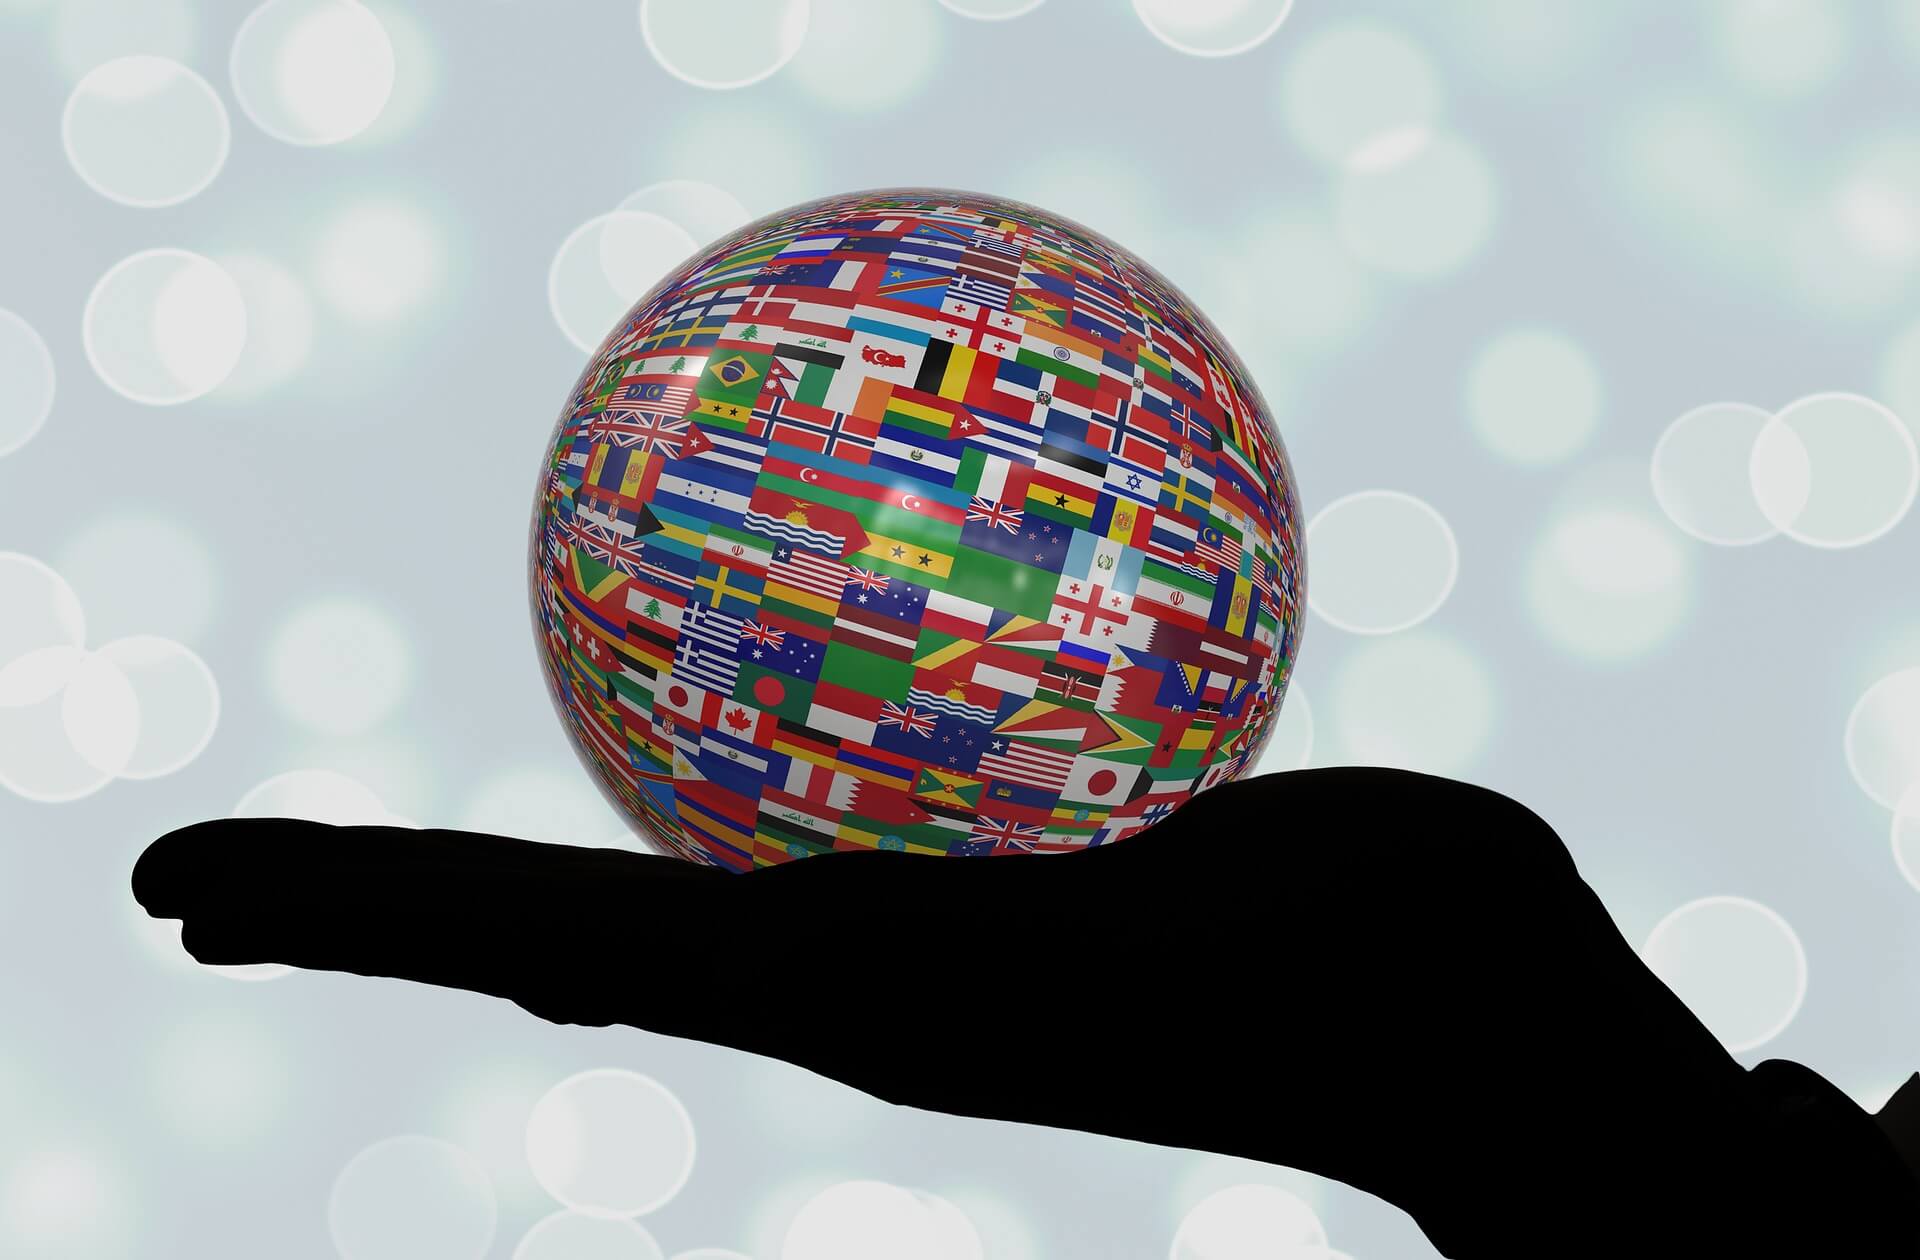 Brand Internationalization Strategies for Global Companies